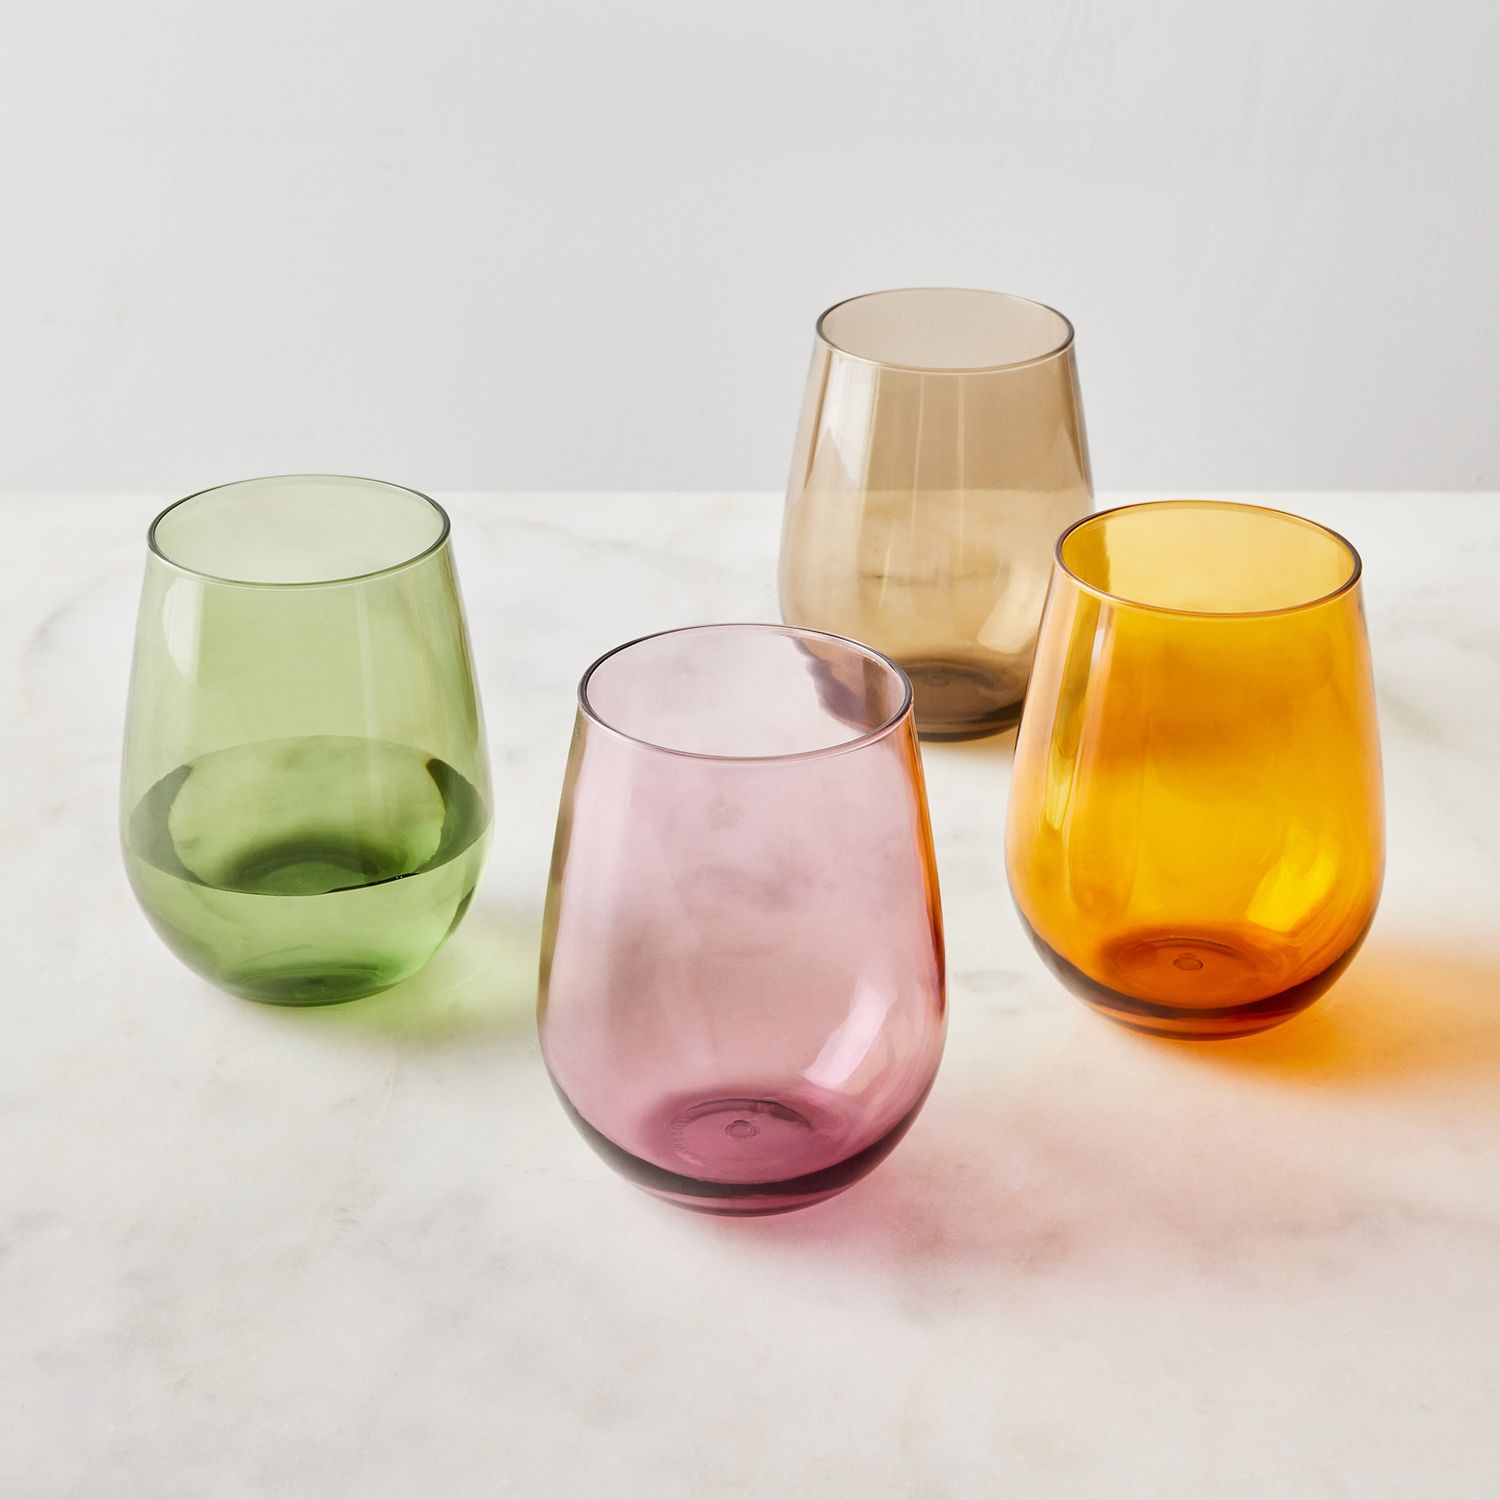 Tossware Reserve Tritan Copolyester Stemless Wine Glasses, Set of